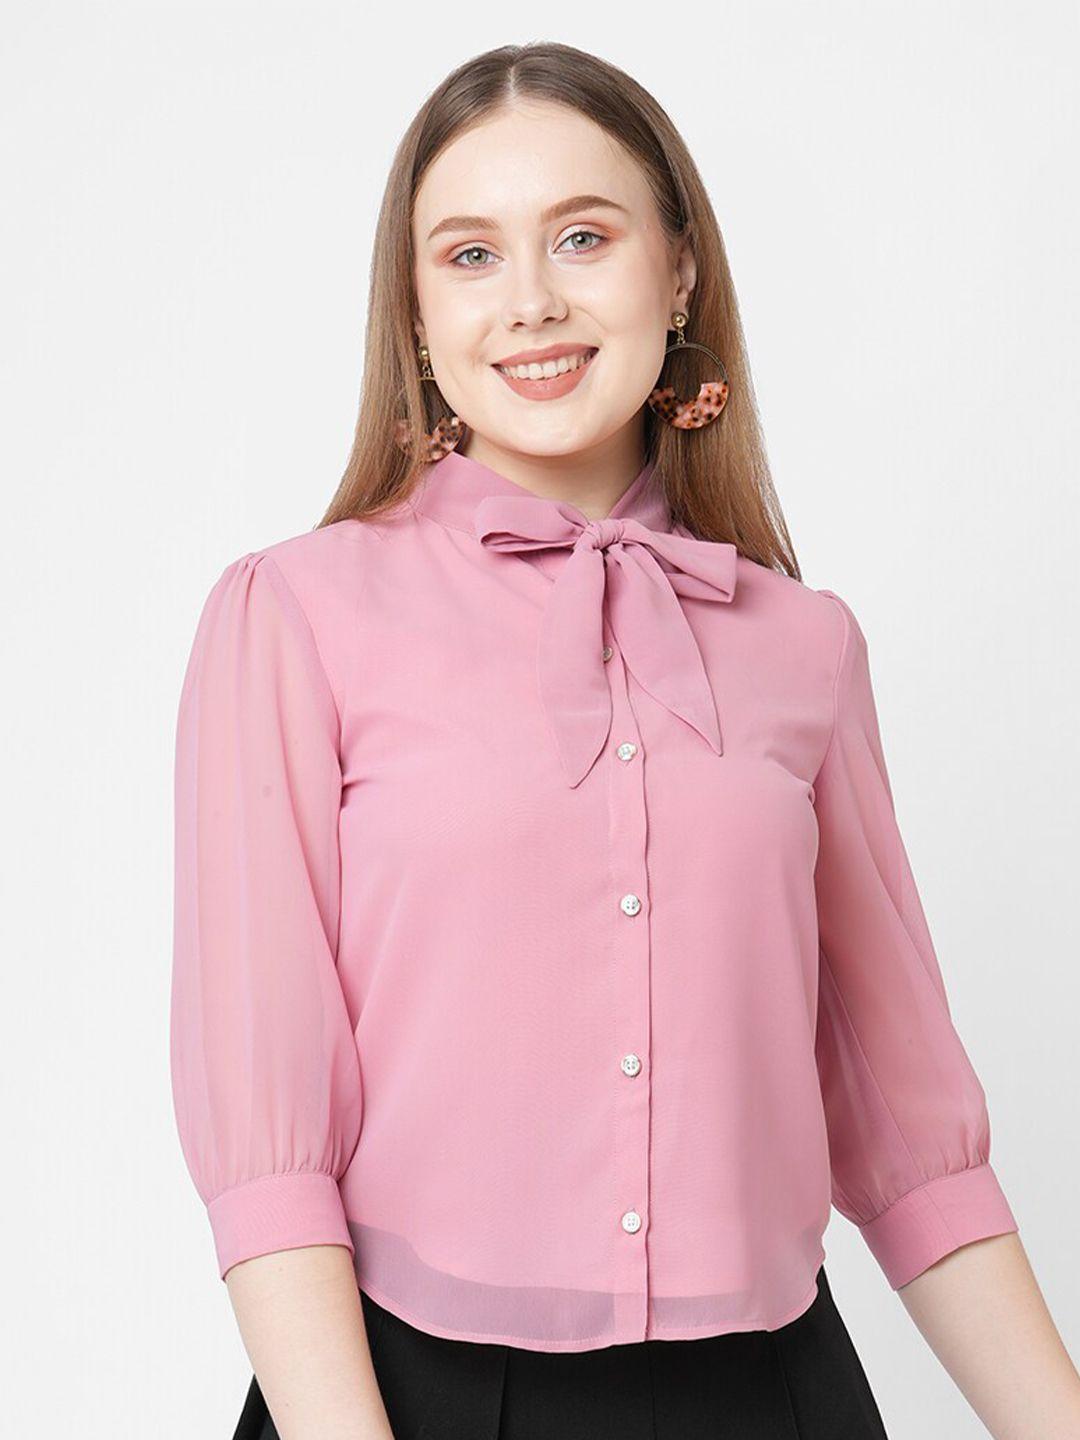 mish women pink tie-up neck georgette shirt style top